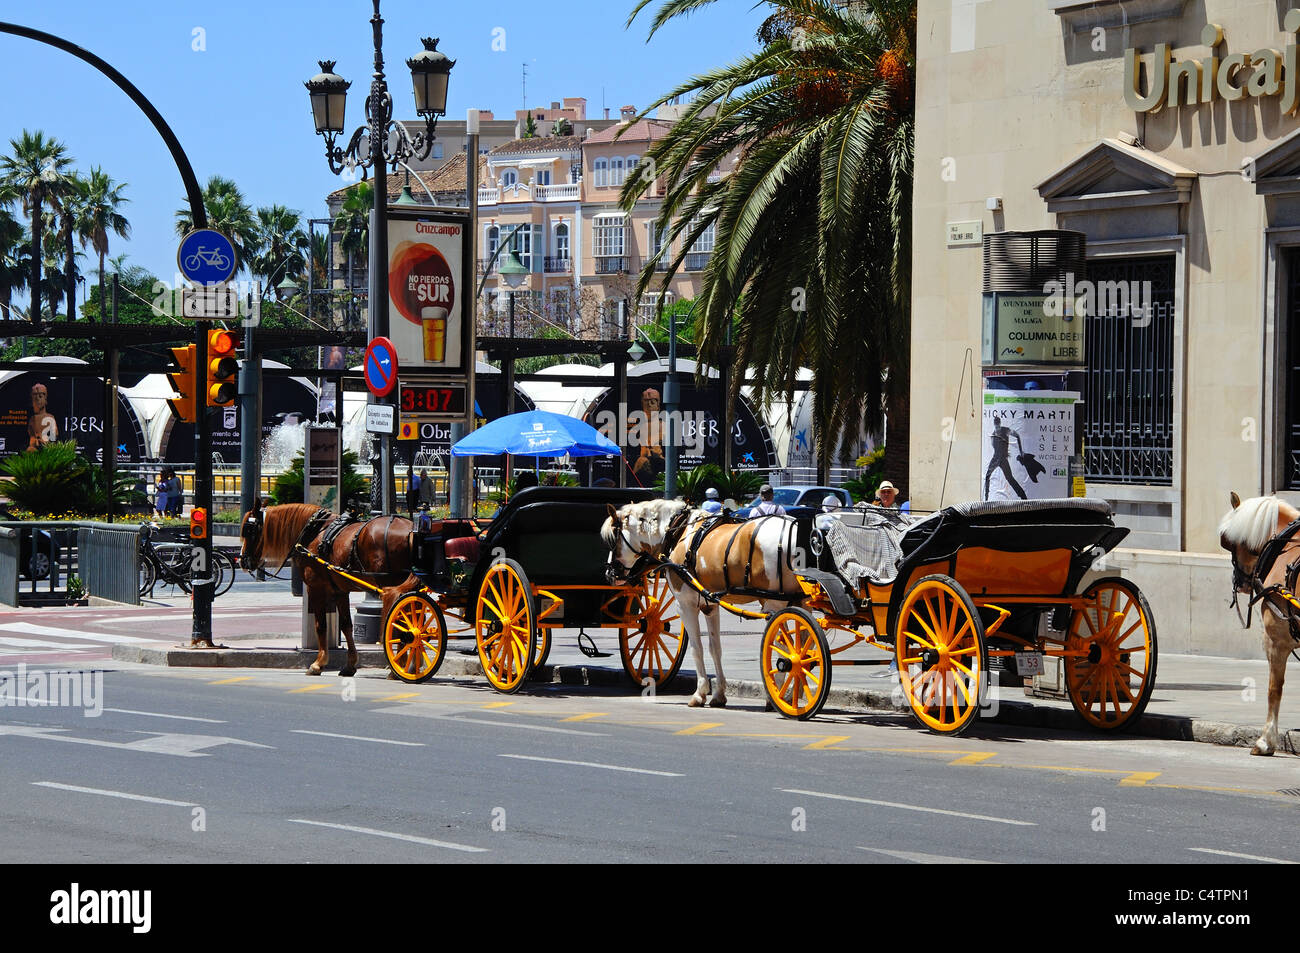 Horse drawn carriages near Cathedral, Molina Lario, Malaga, Costa del Sol, Malaga Province, Andalucia, Spain, Western Europe. Stock Photo